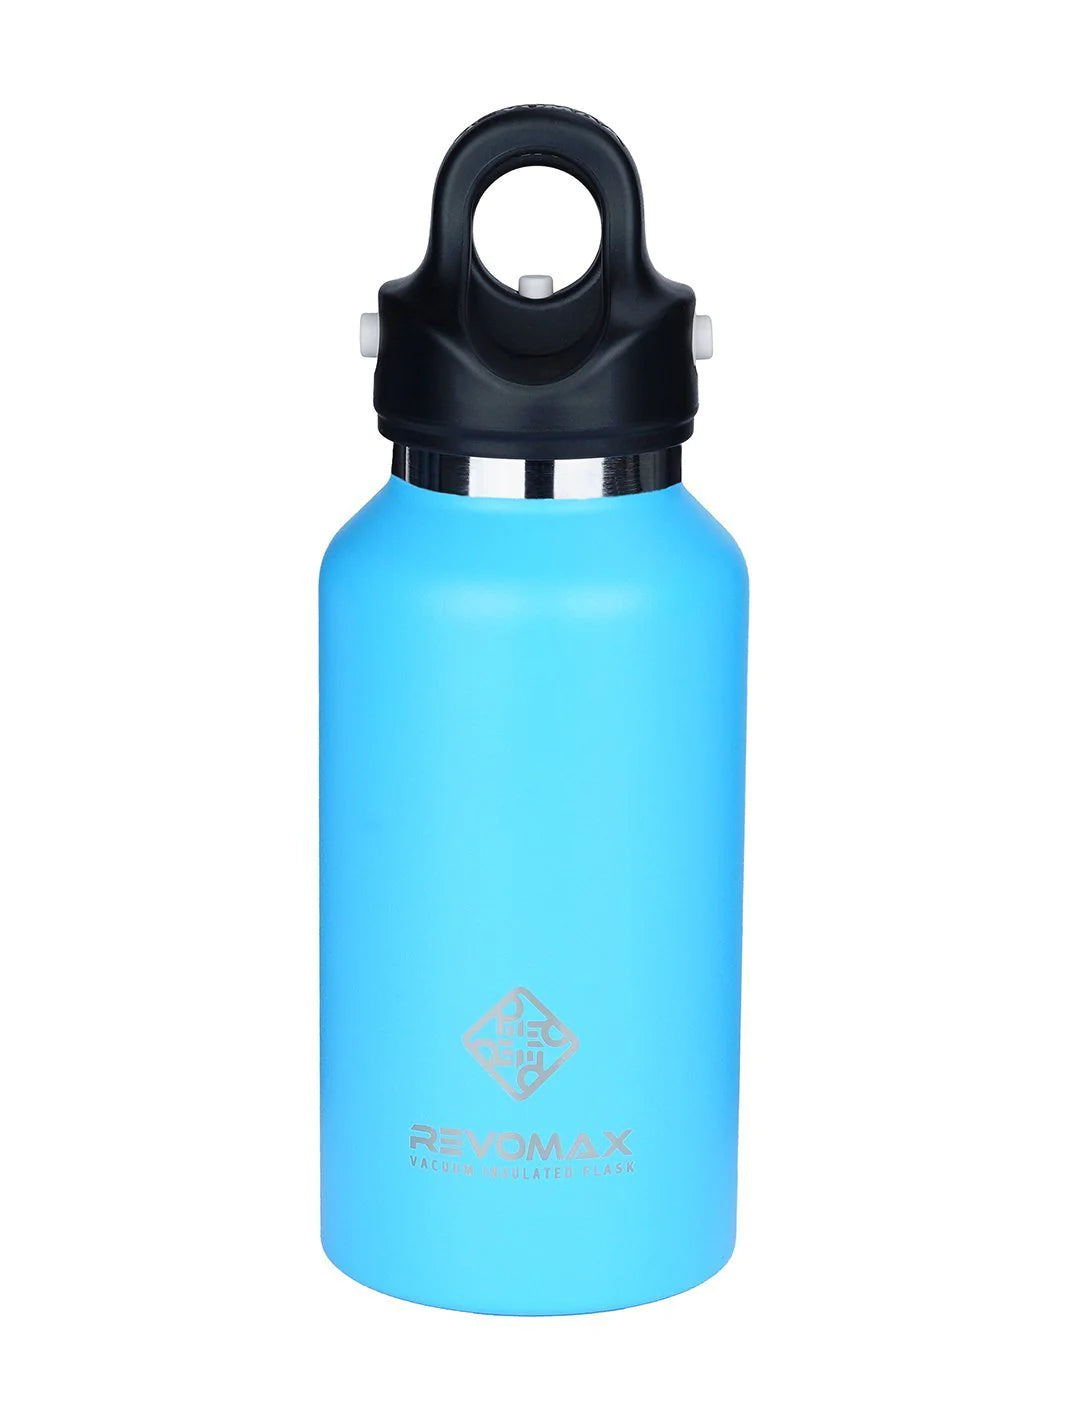 Revomax Vacuum Insulated Flask - 355ml / 12oz